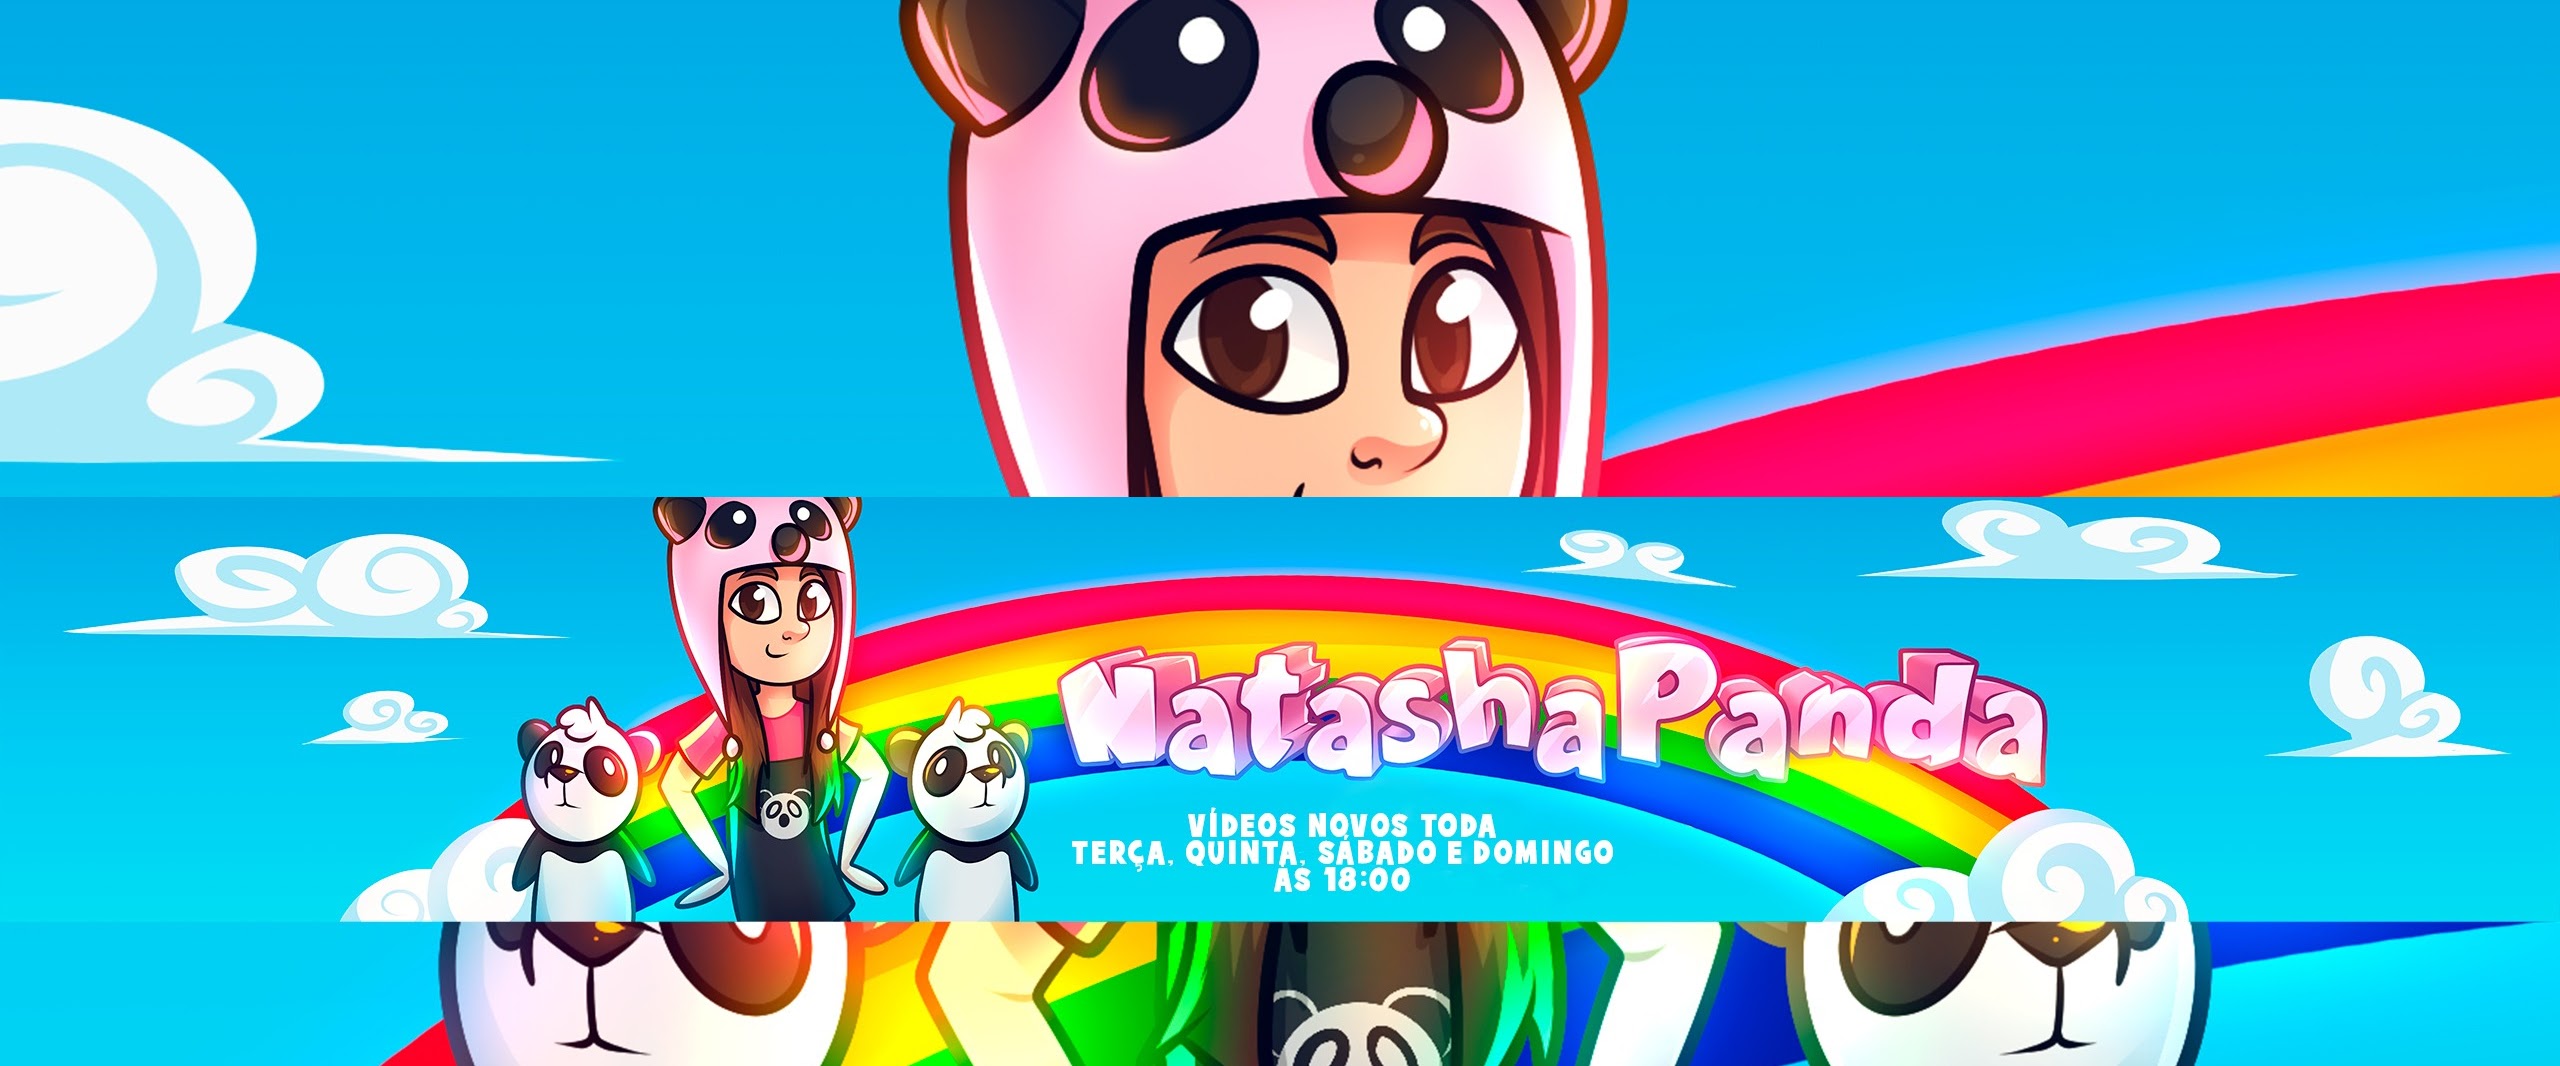 VicTycoon Art - BANNER - Natasha Panda ()